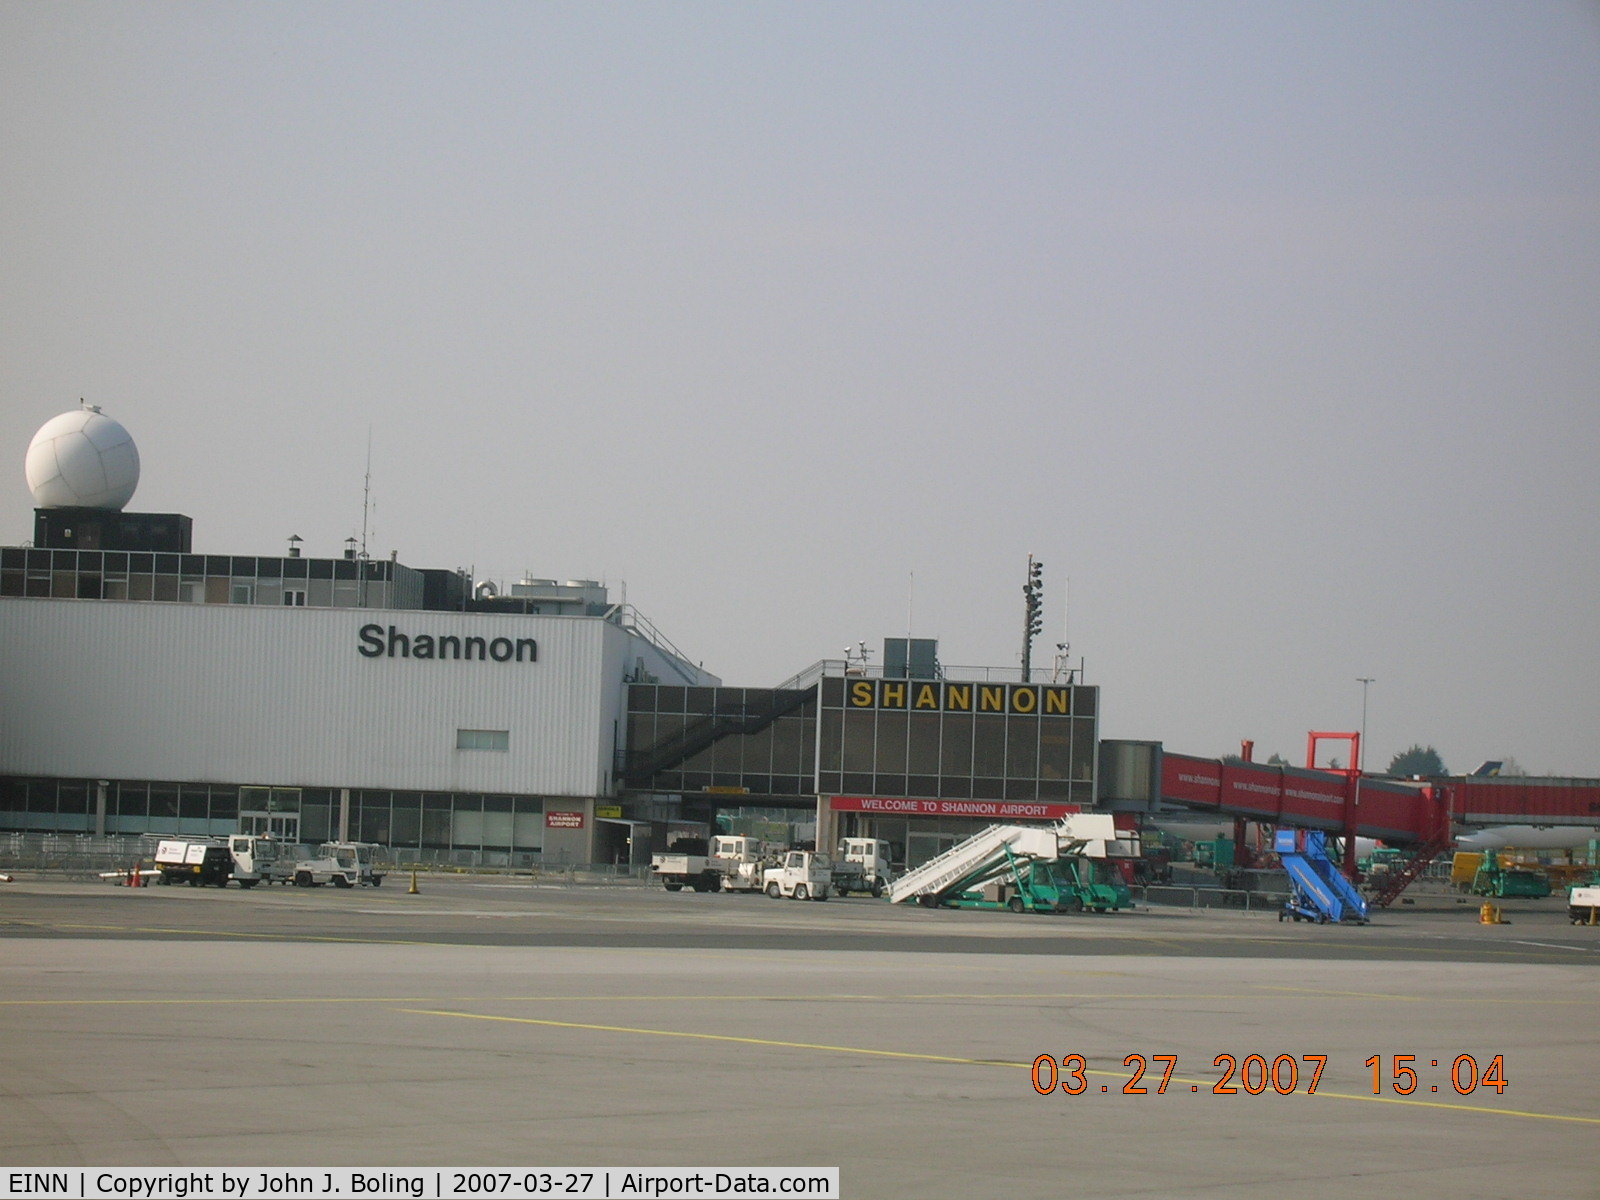 Shannon Airport, Shannon, County Clare Ireland (EINN) - Terminal at Shannon, Ireland